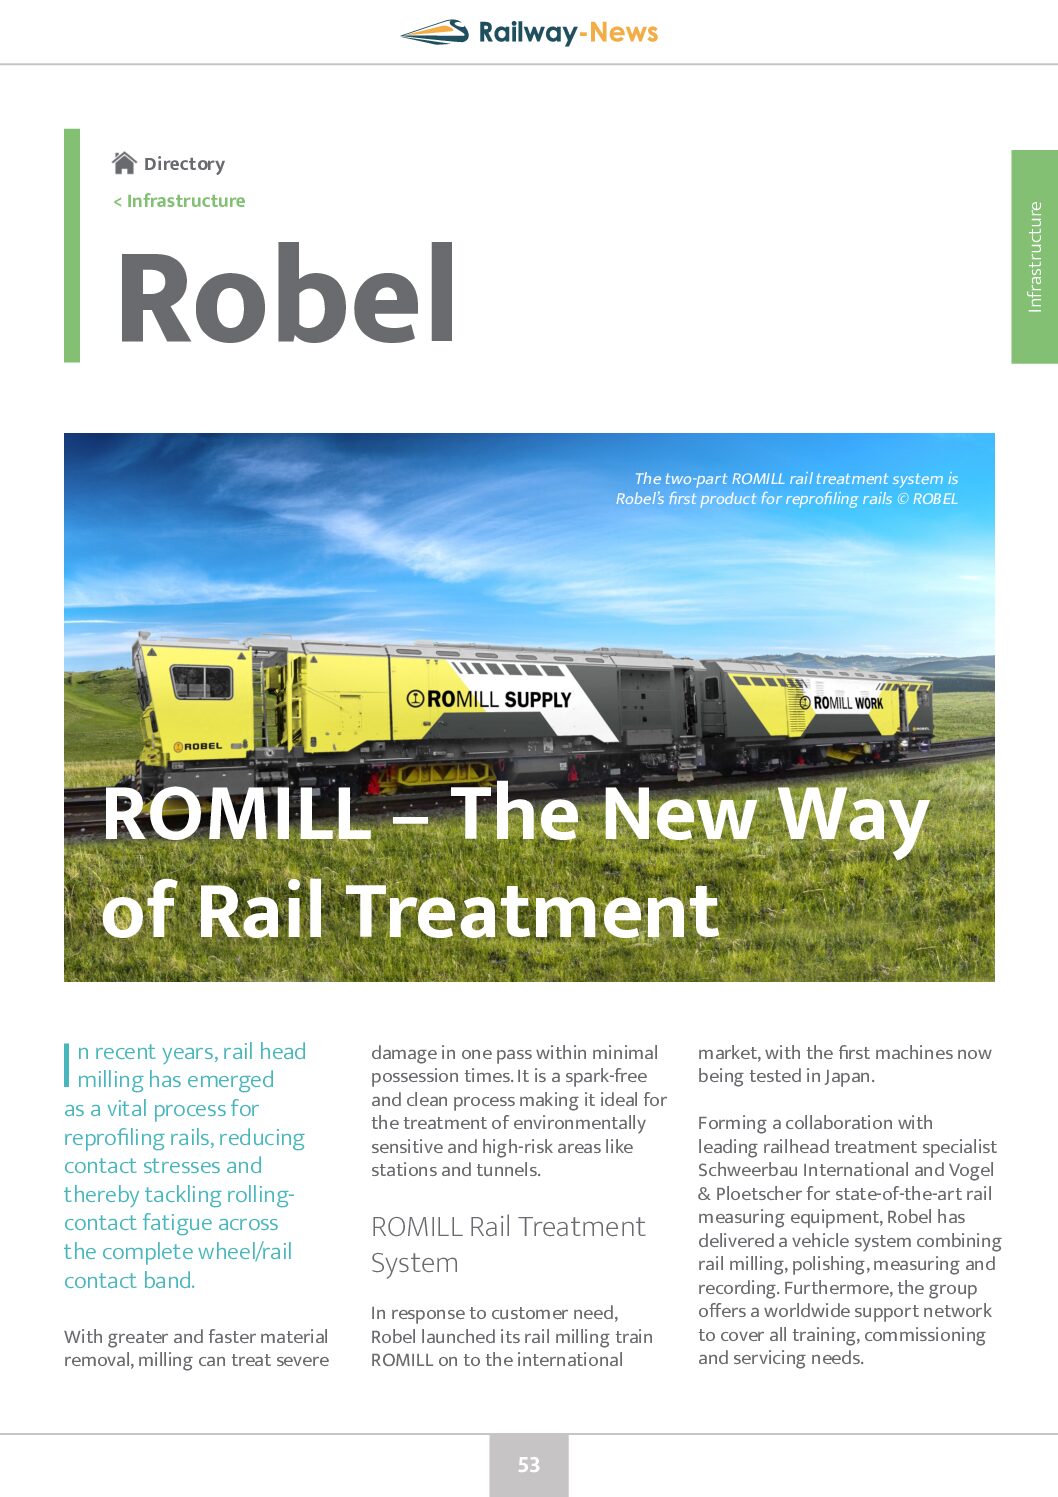 ROMILL – The New Way of Rail Treatment